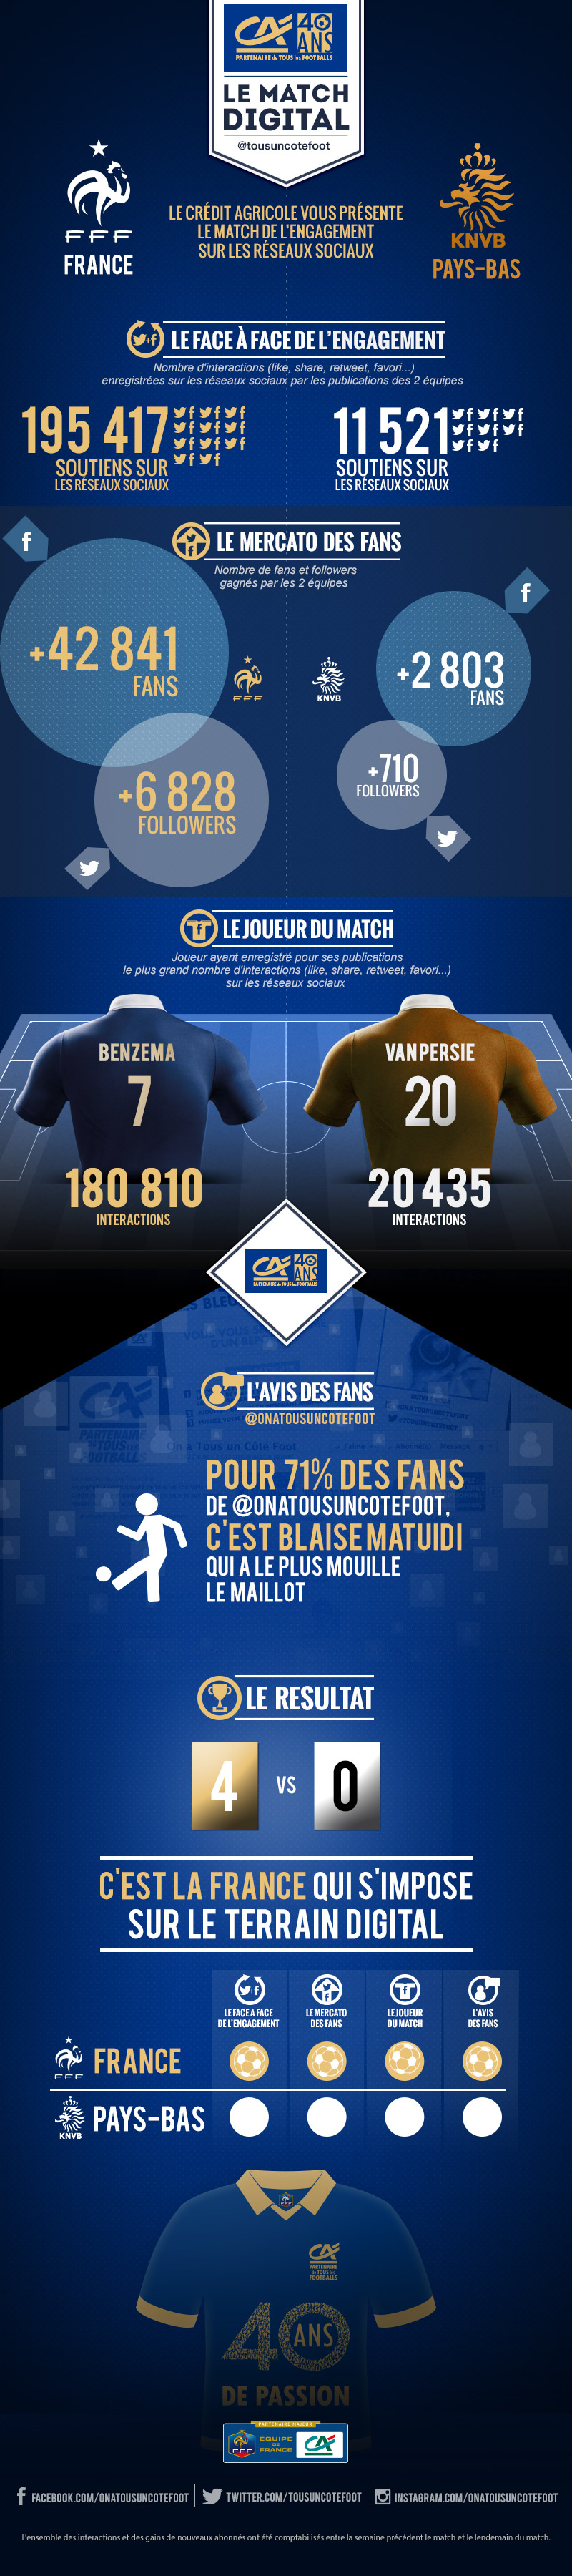 HSE-CA-MatchDigital-France-PaysBas-07-Footer